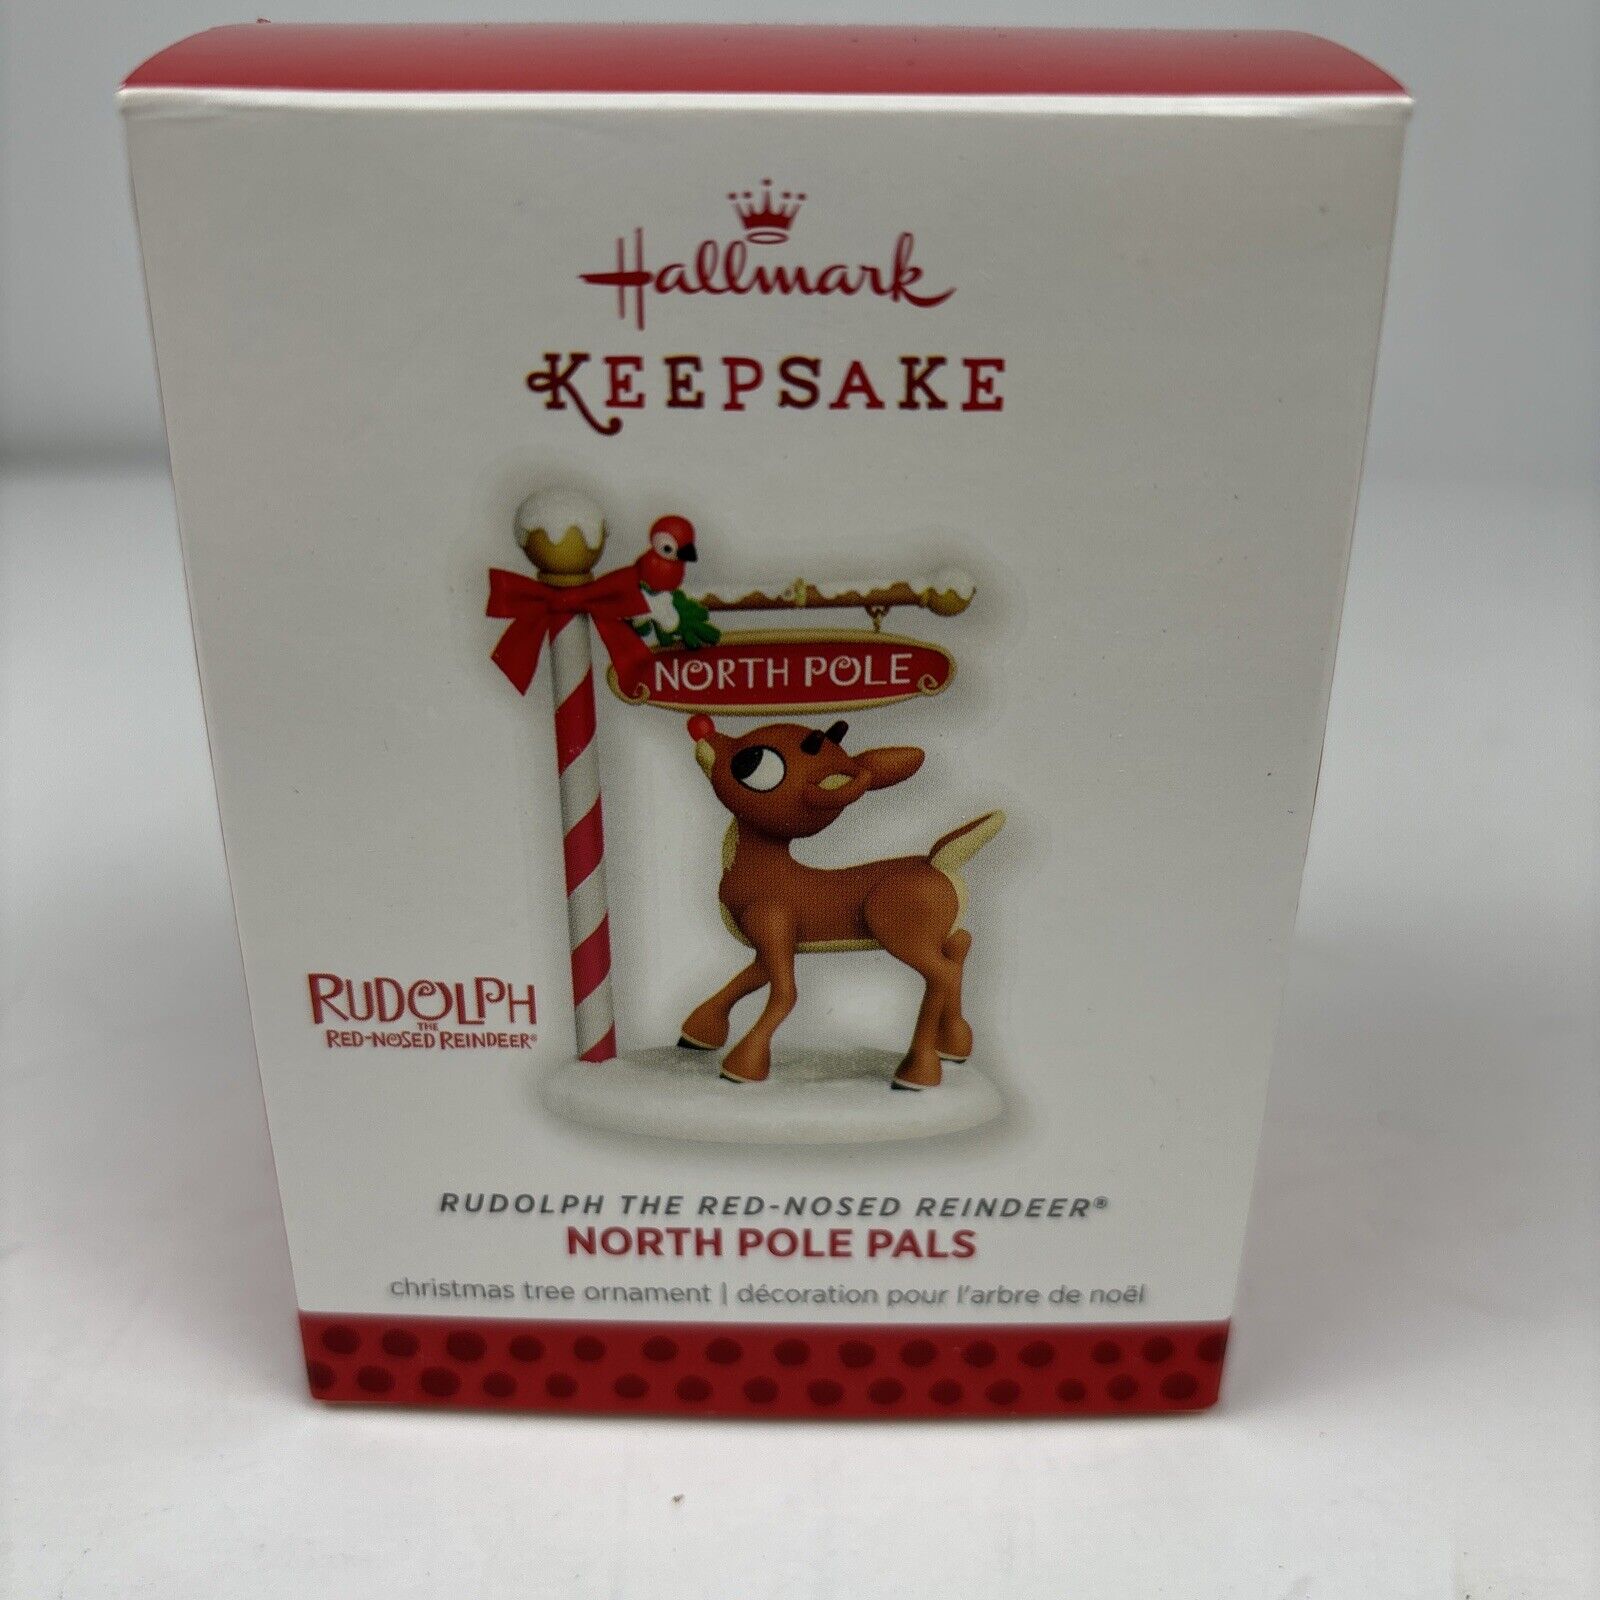 Hallmark Keepsake Rudolph Ornament North Pole Pals 2013 Red Nosed Reindeer NEW